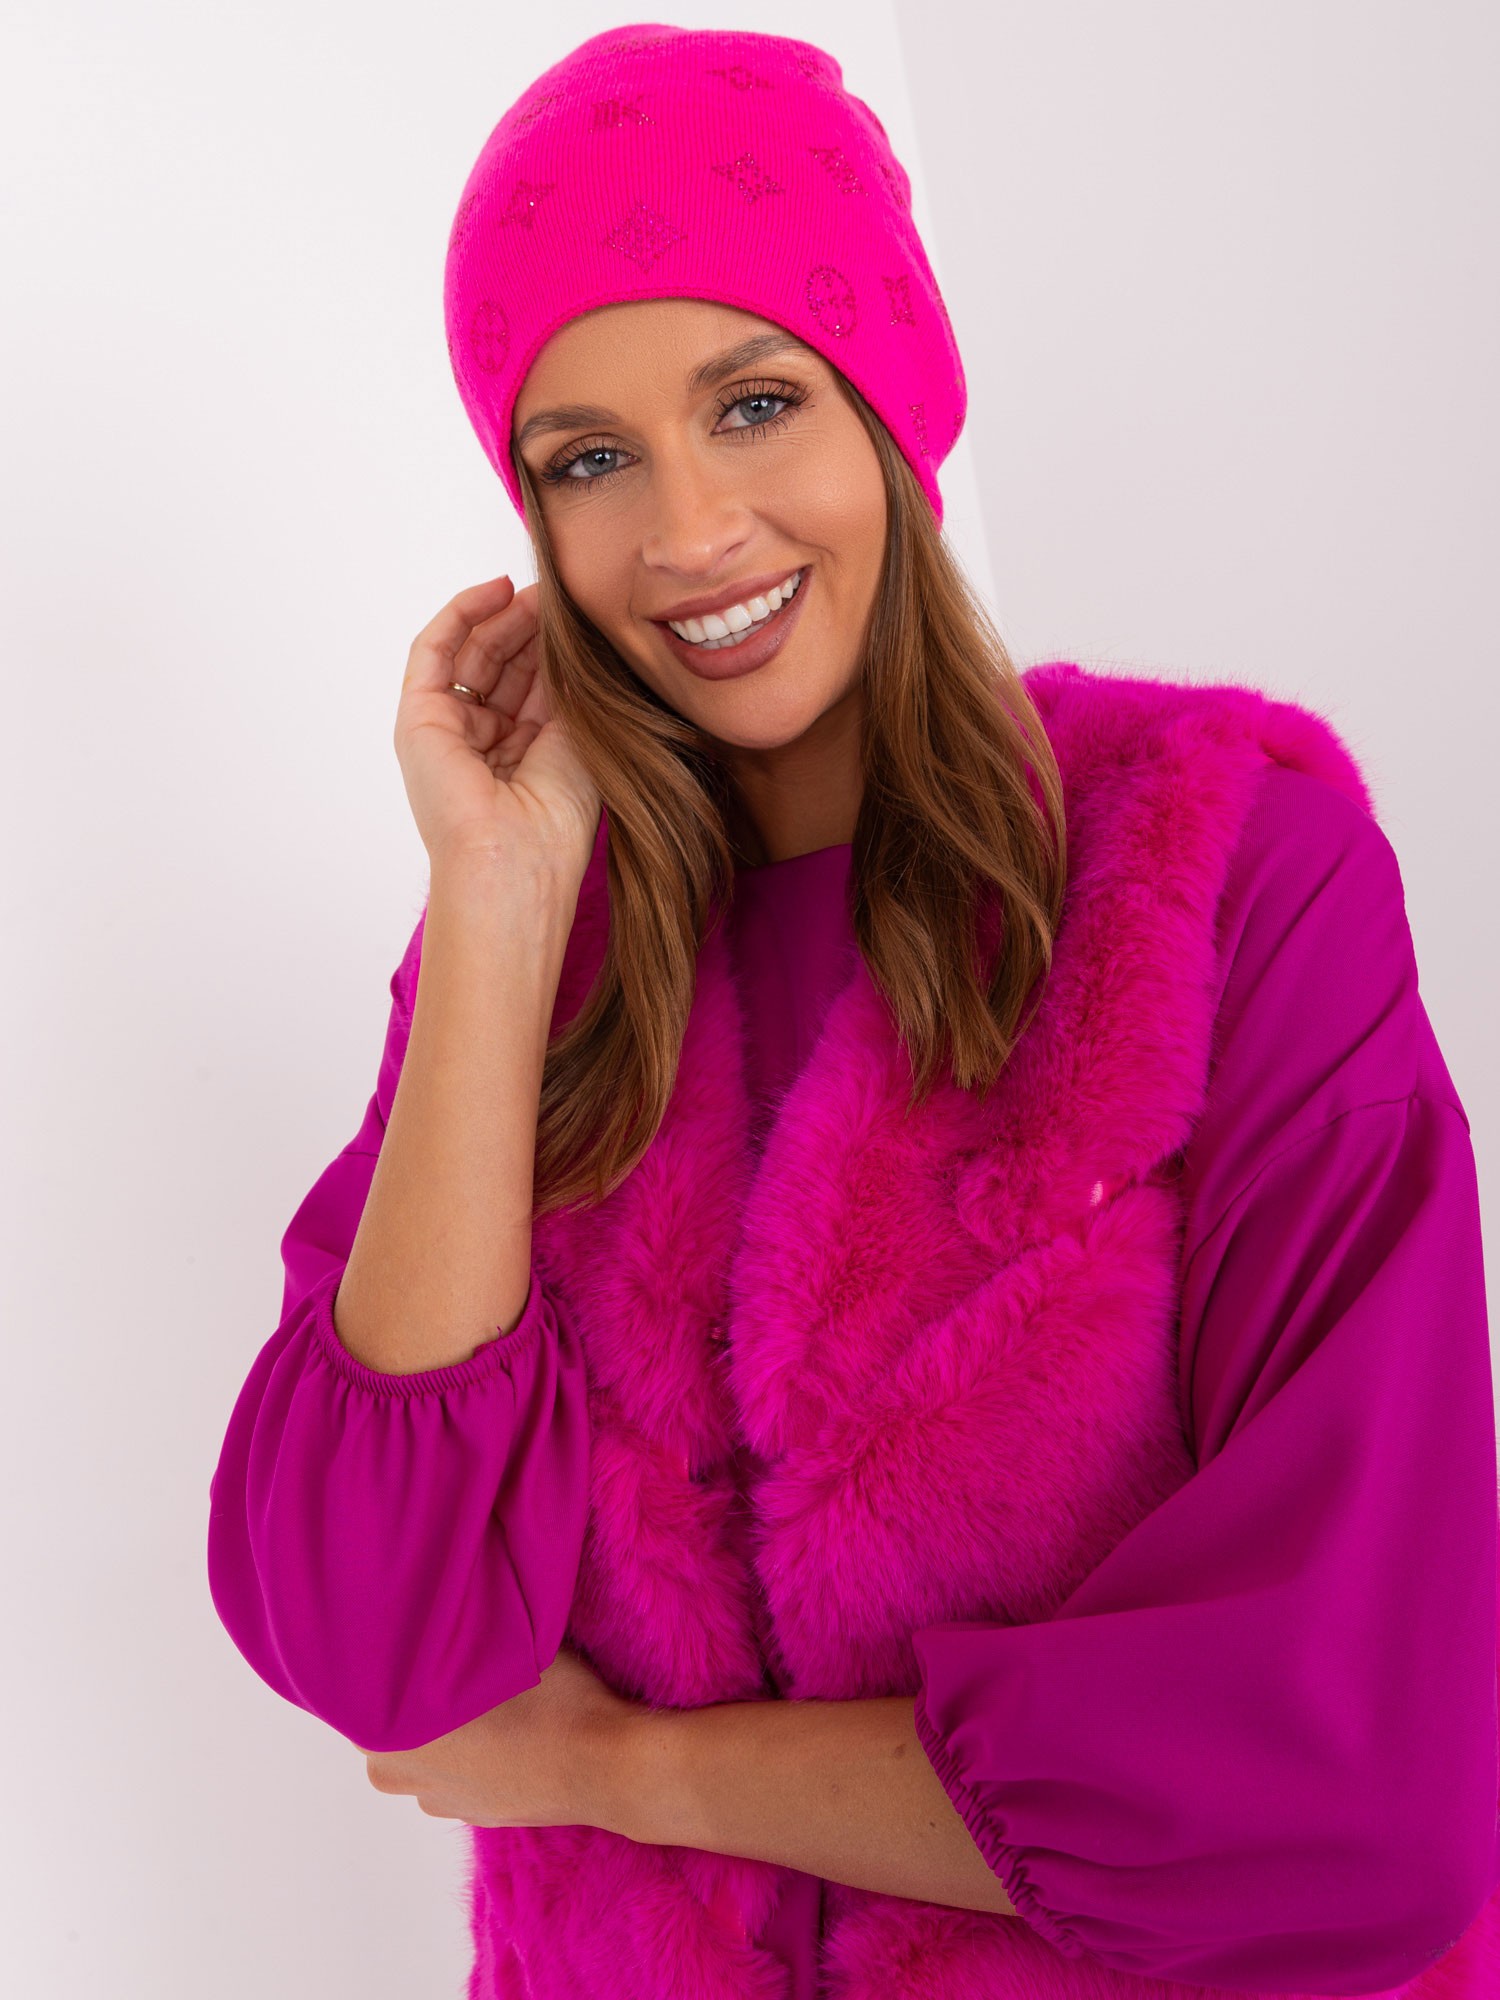 Dark pink winter hat with appliqués